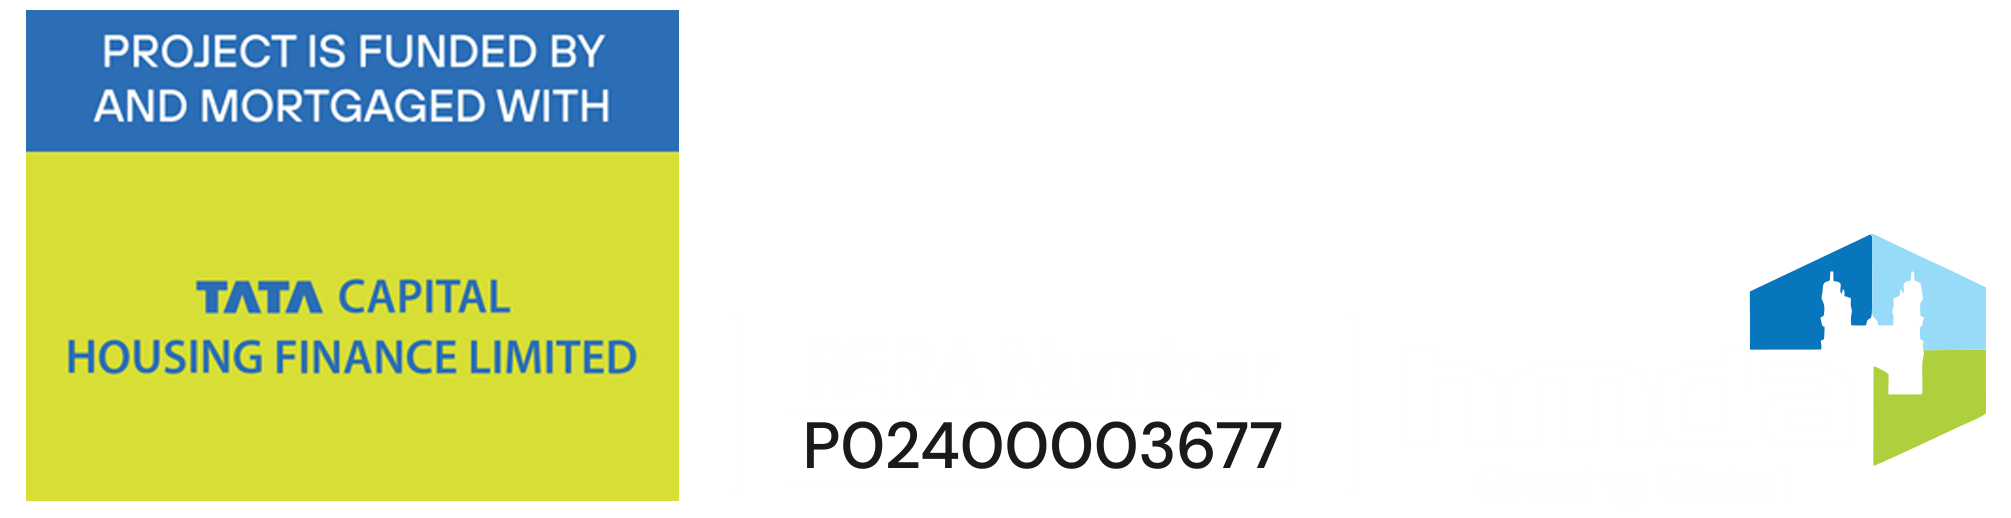 Rera Number & HMDA Logo